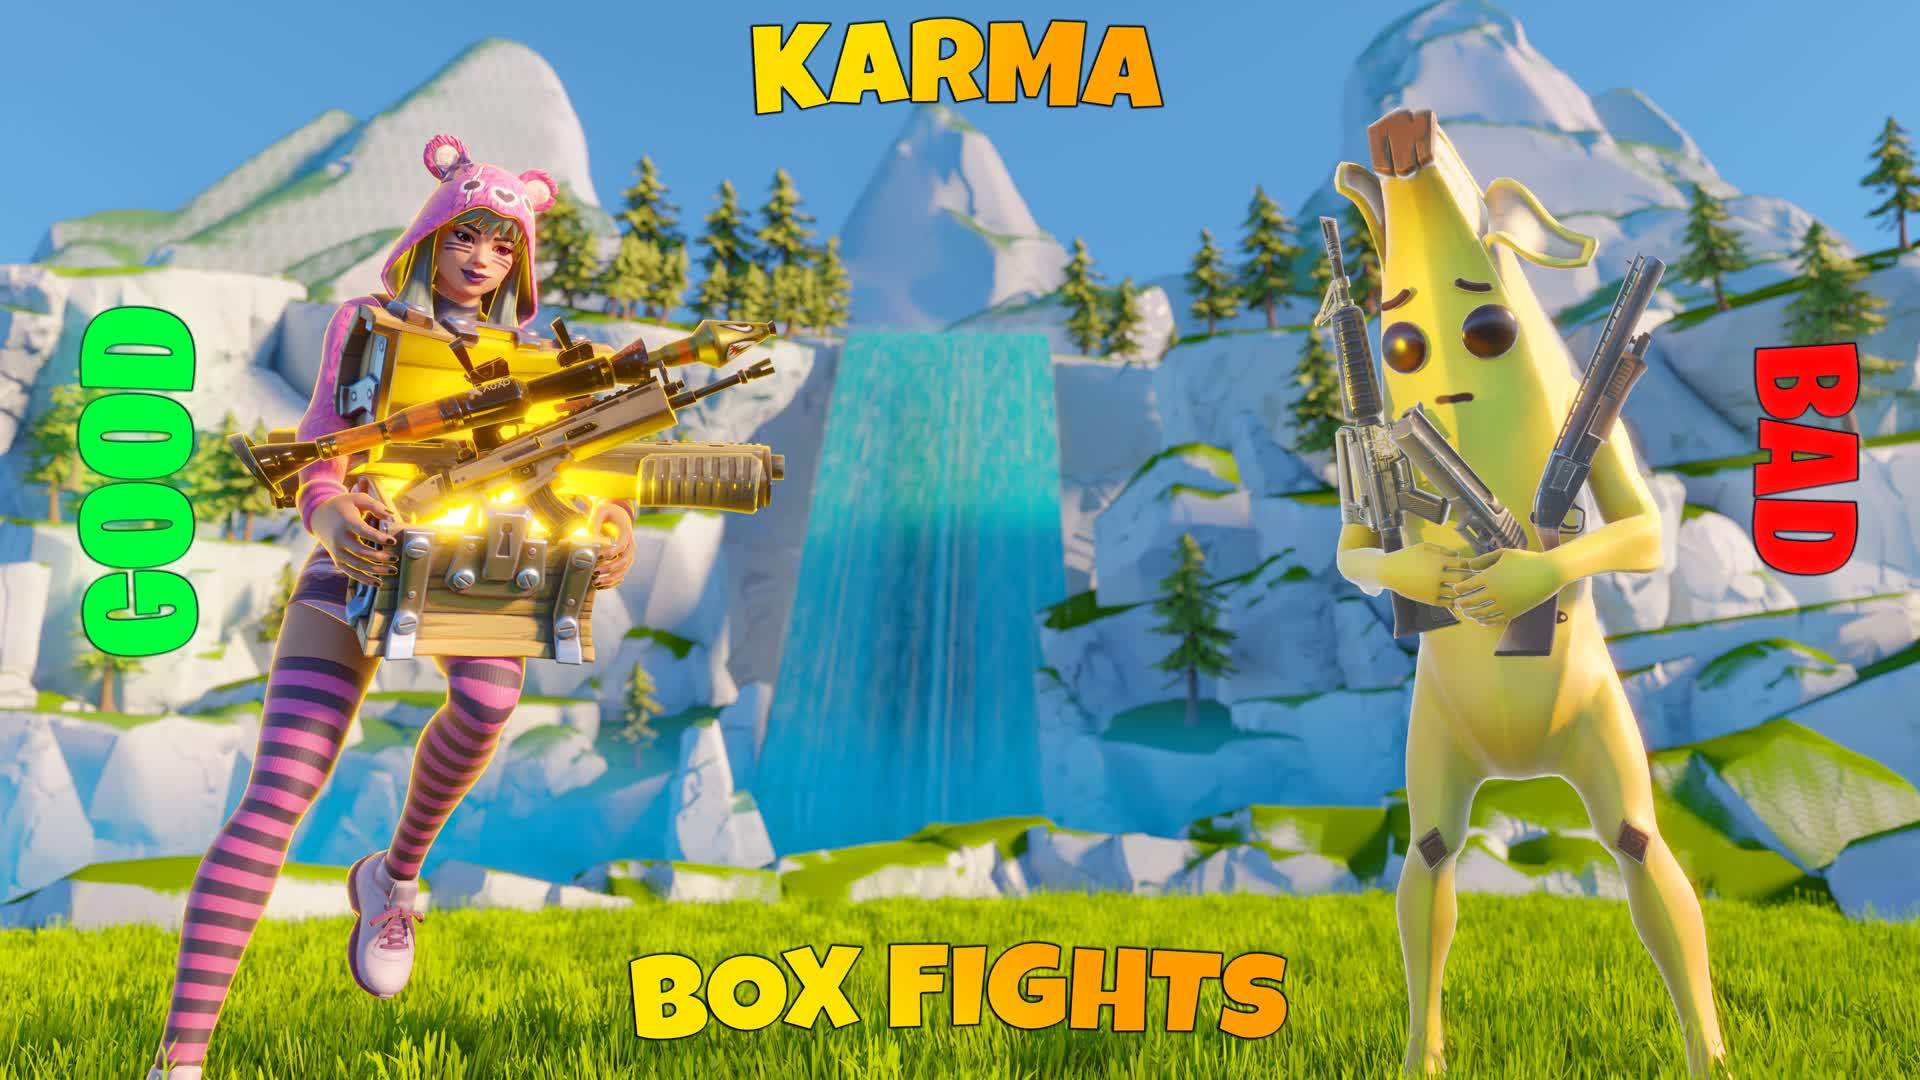 KARMA - Good or Bad? (Box Fights)